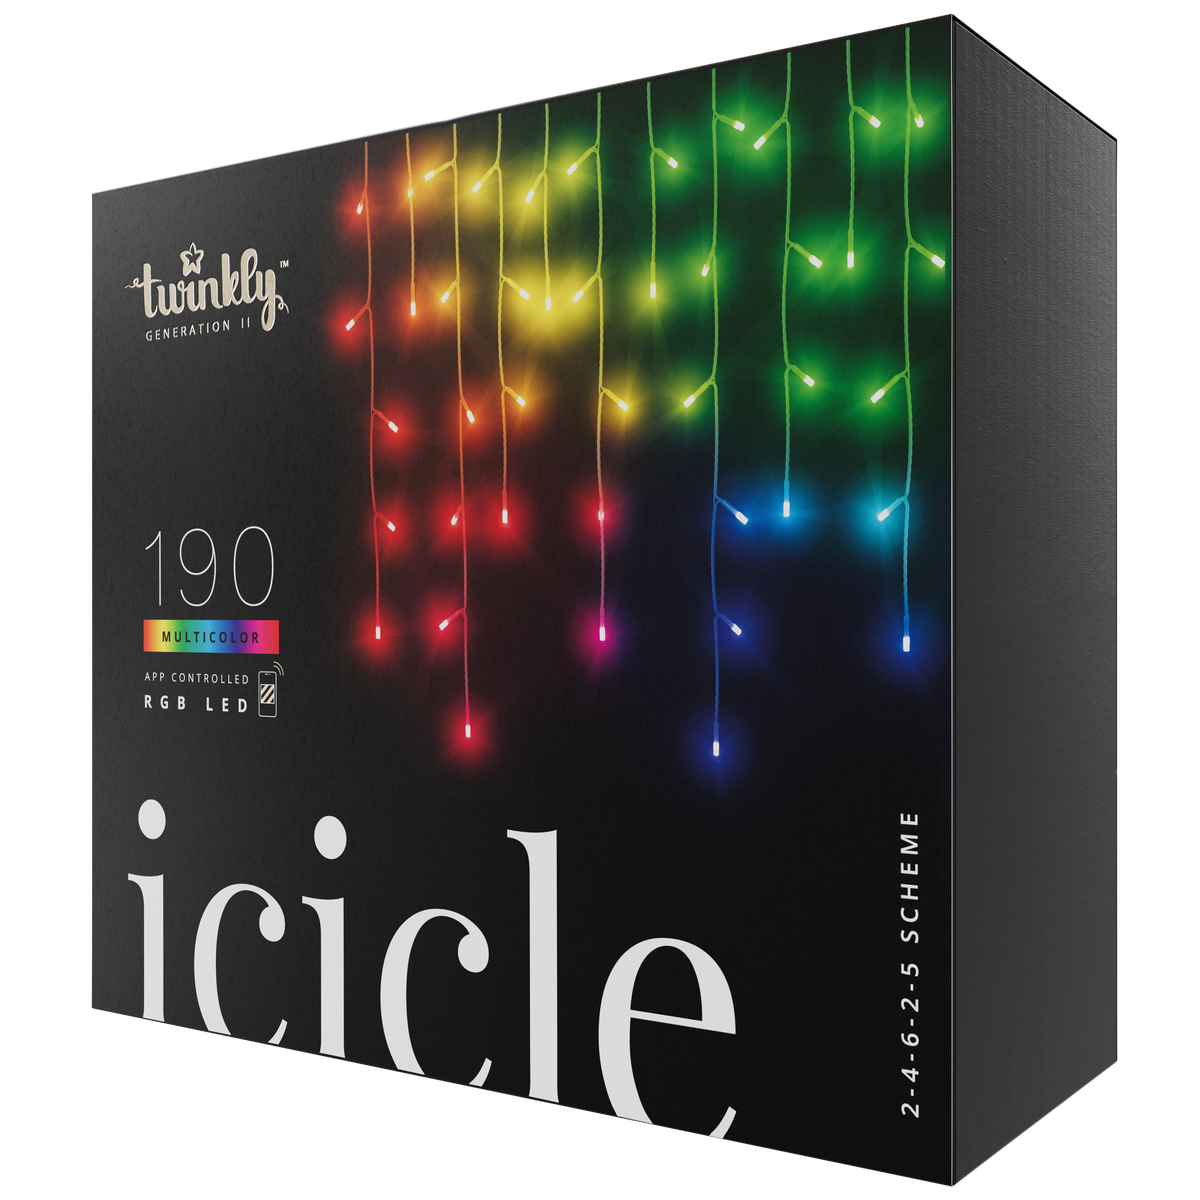 Icicle (многоцветное издание)